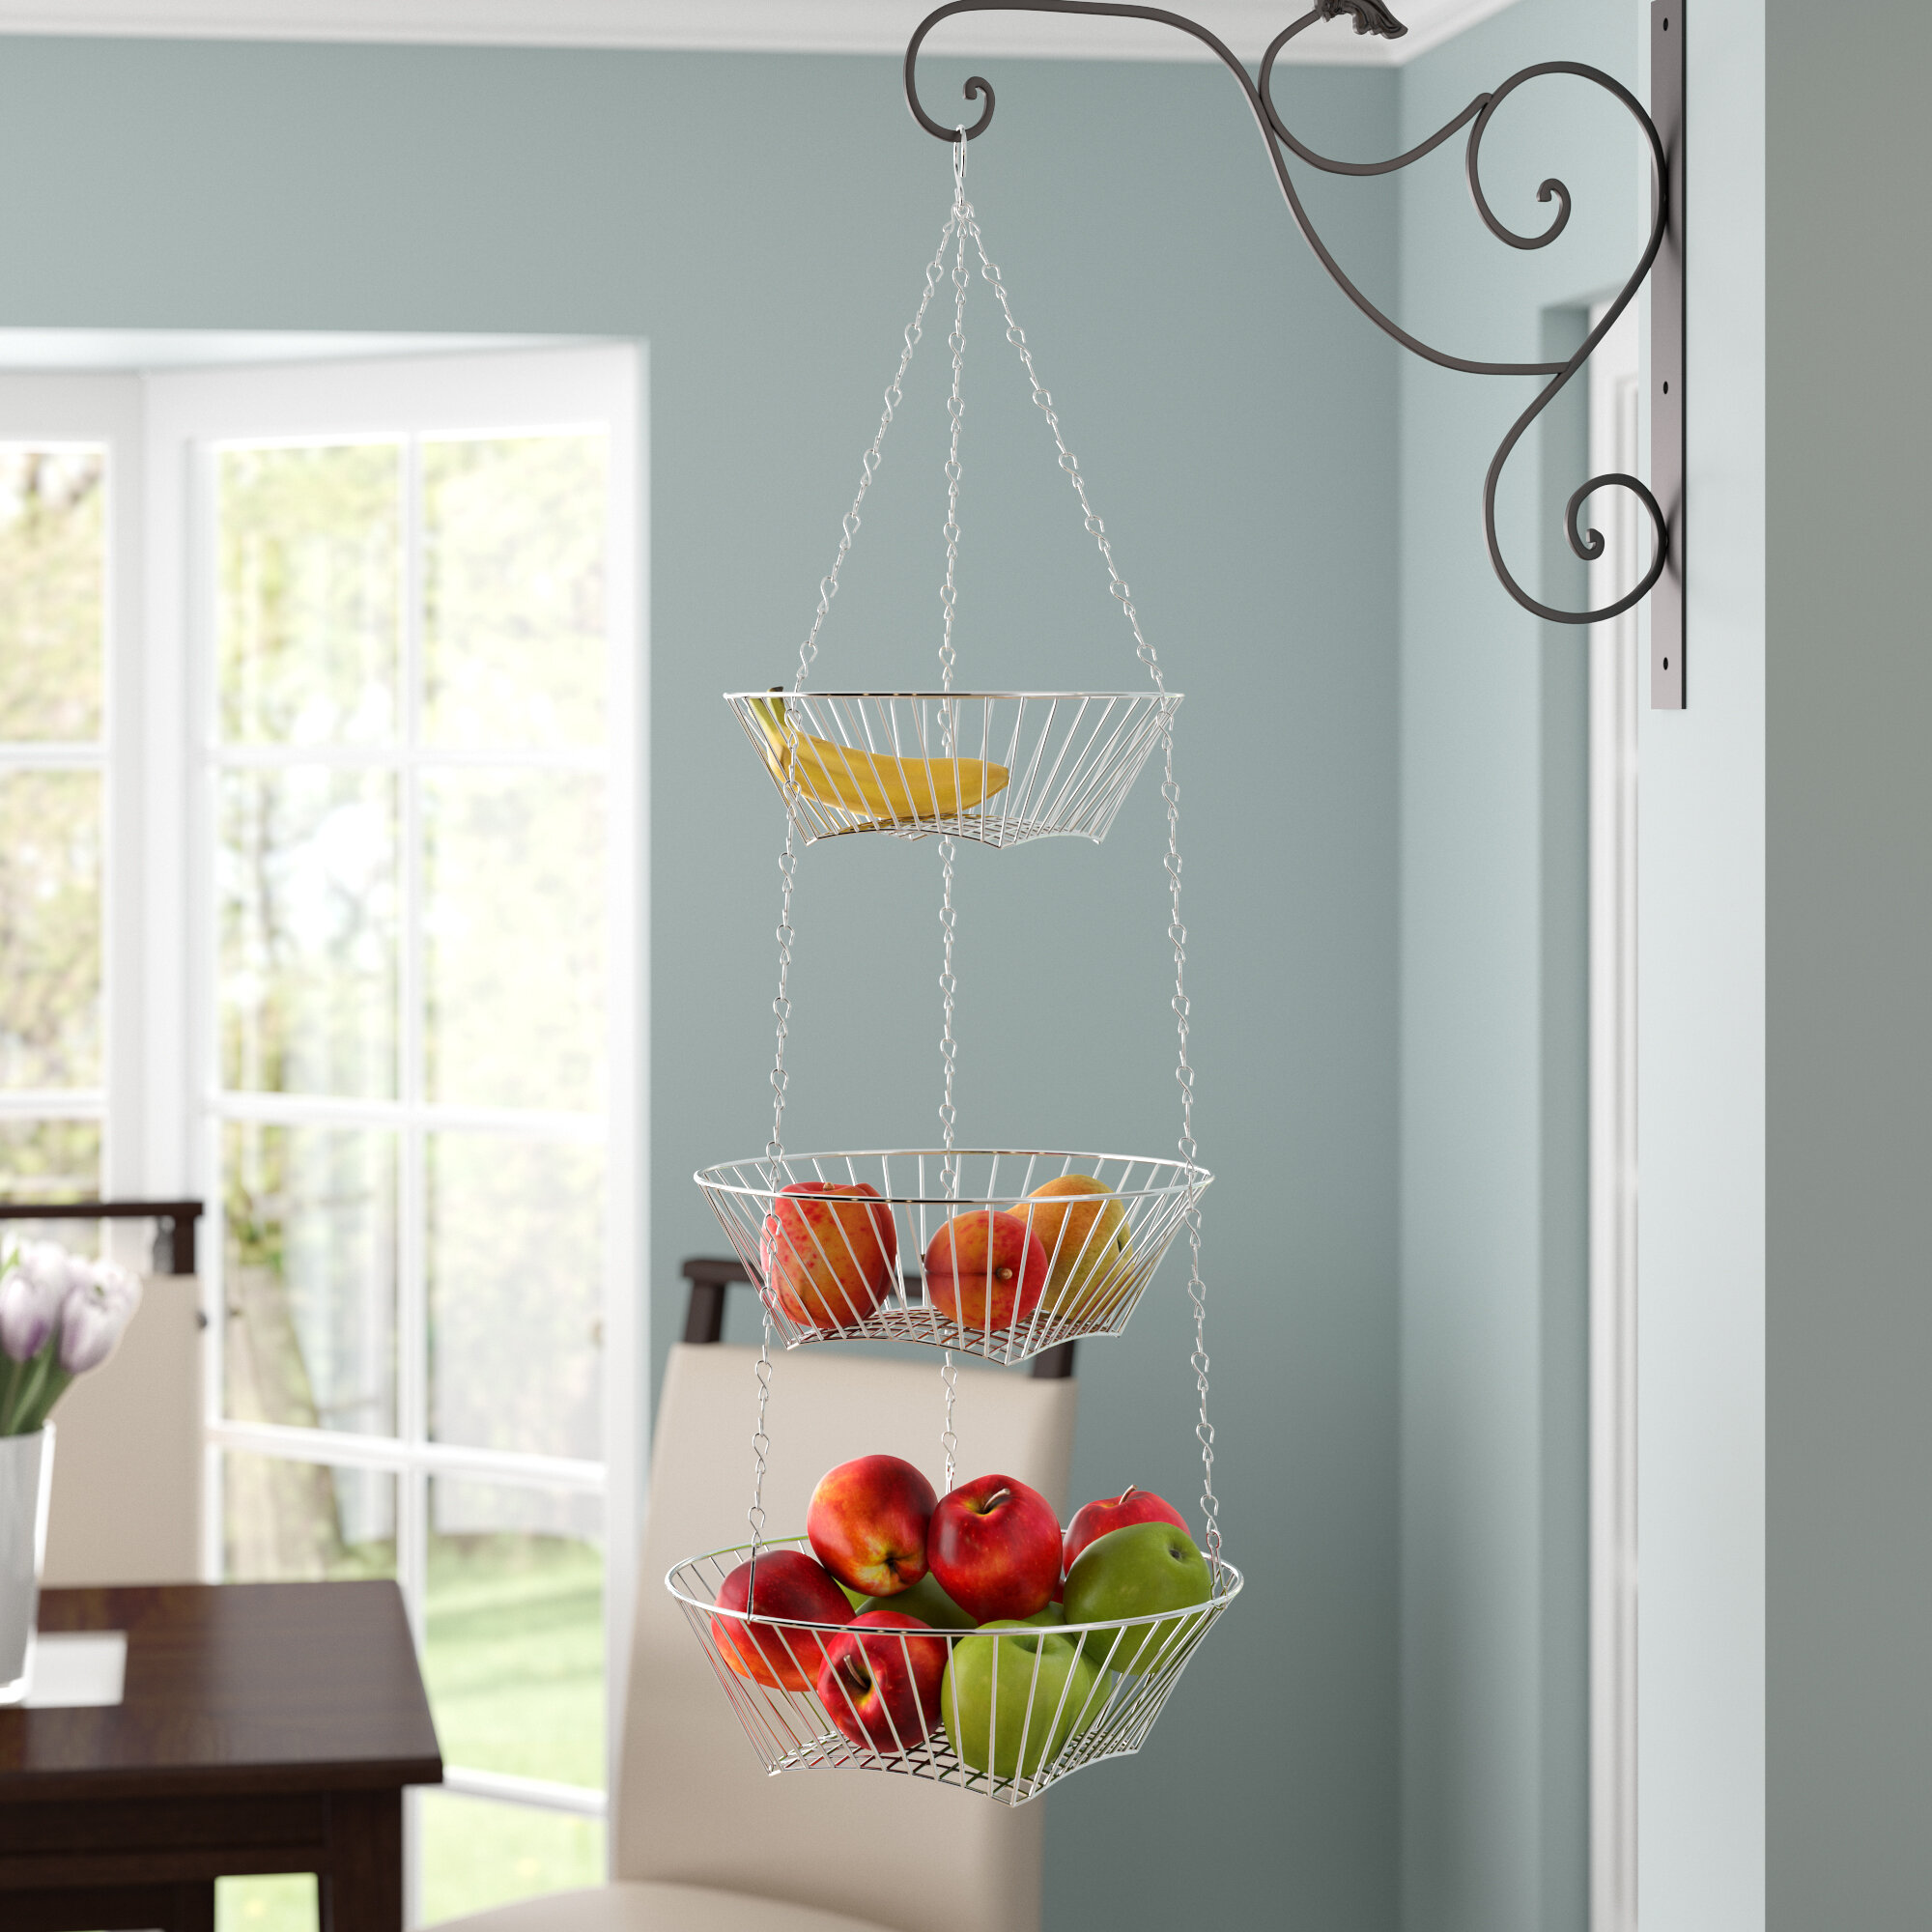 Rebrilliant Hanging Fruit Basket Reviews Wayfair